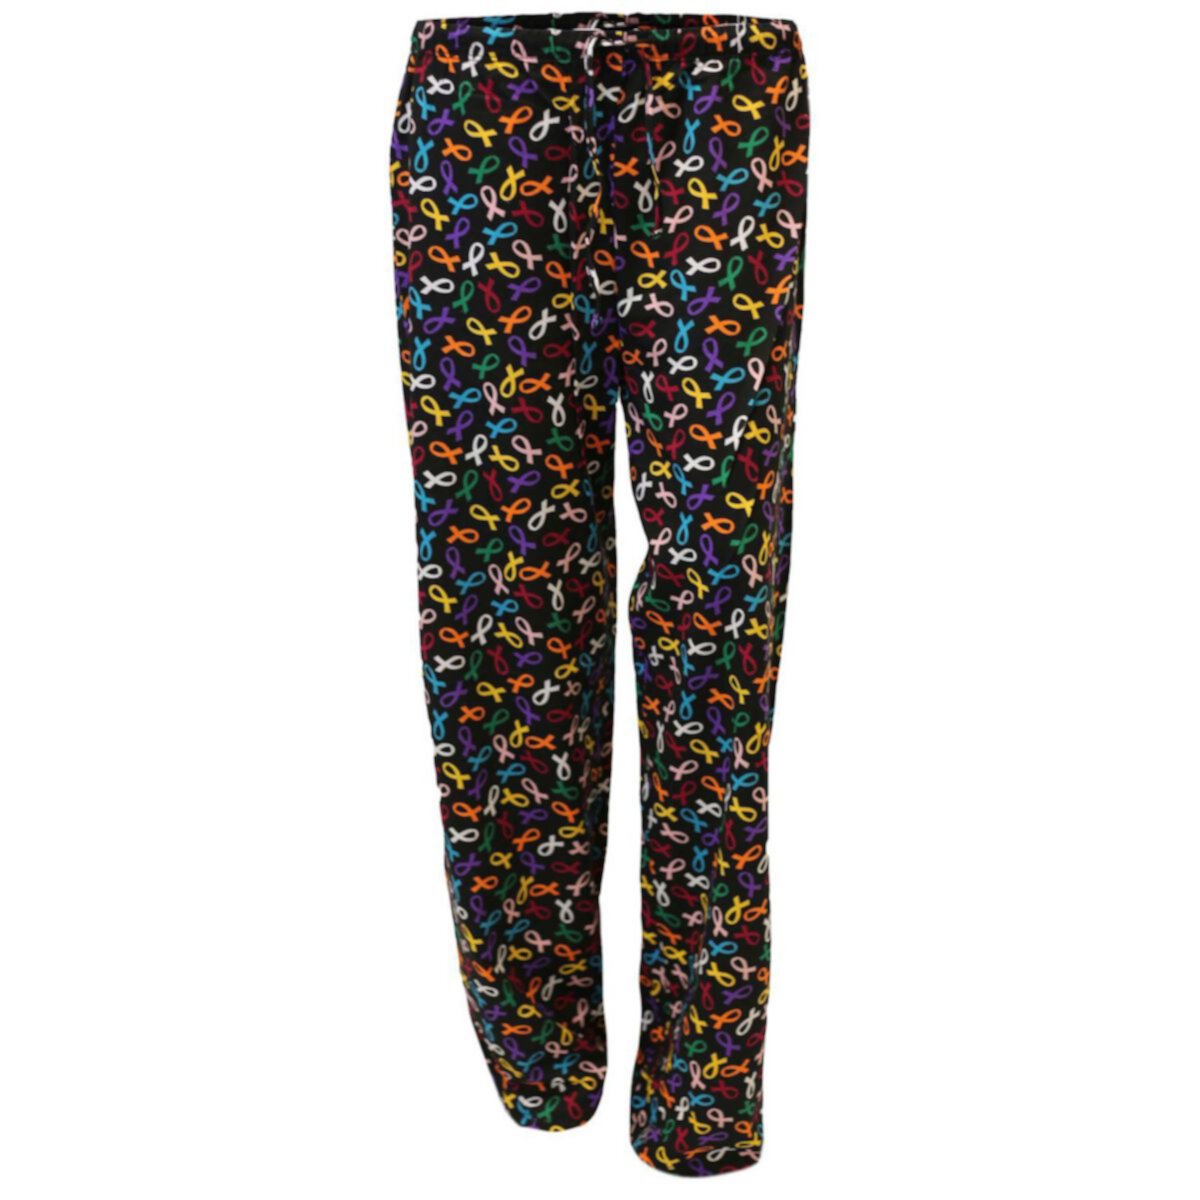 Cancer Awareness Women's Adult Pajama Sleep Pants MCCC Sportswear